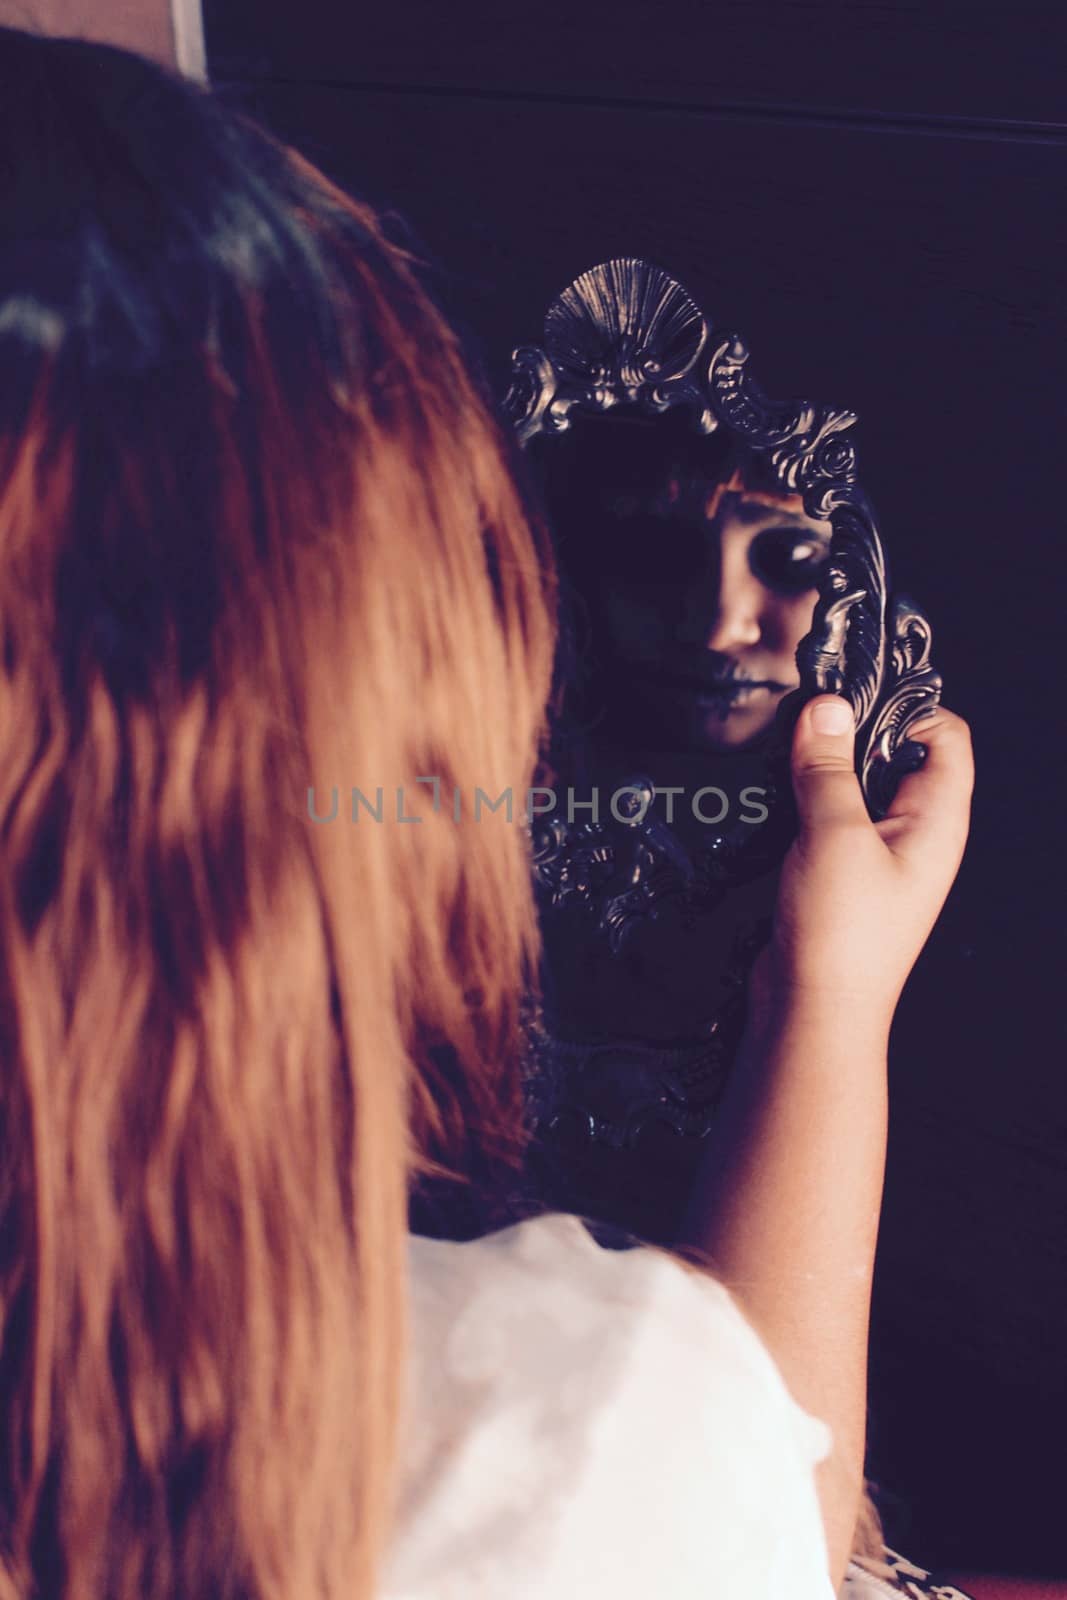 creepy mirror reflection by asary94